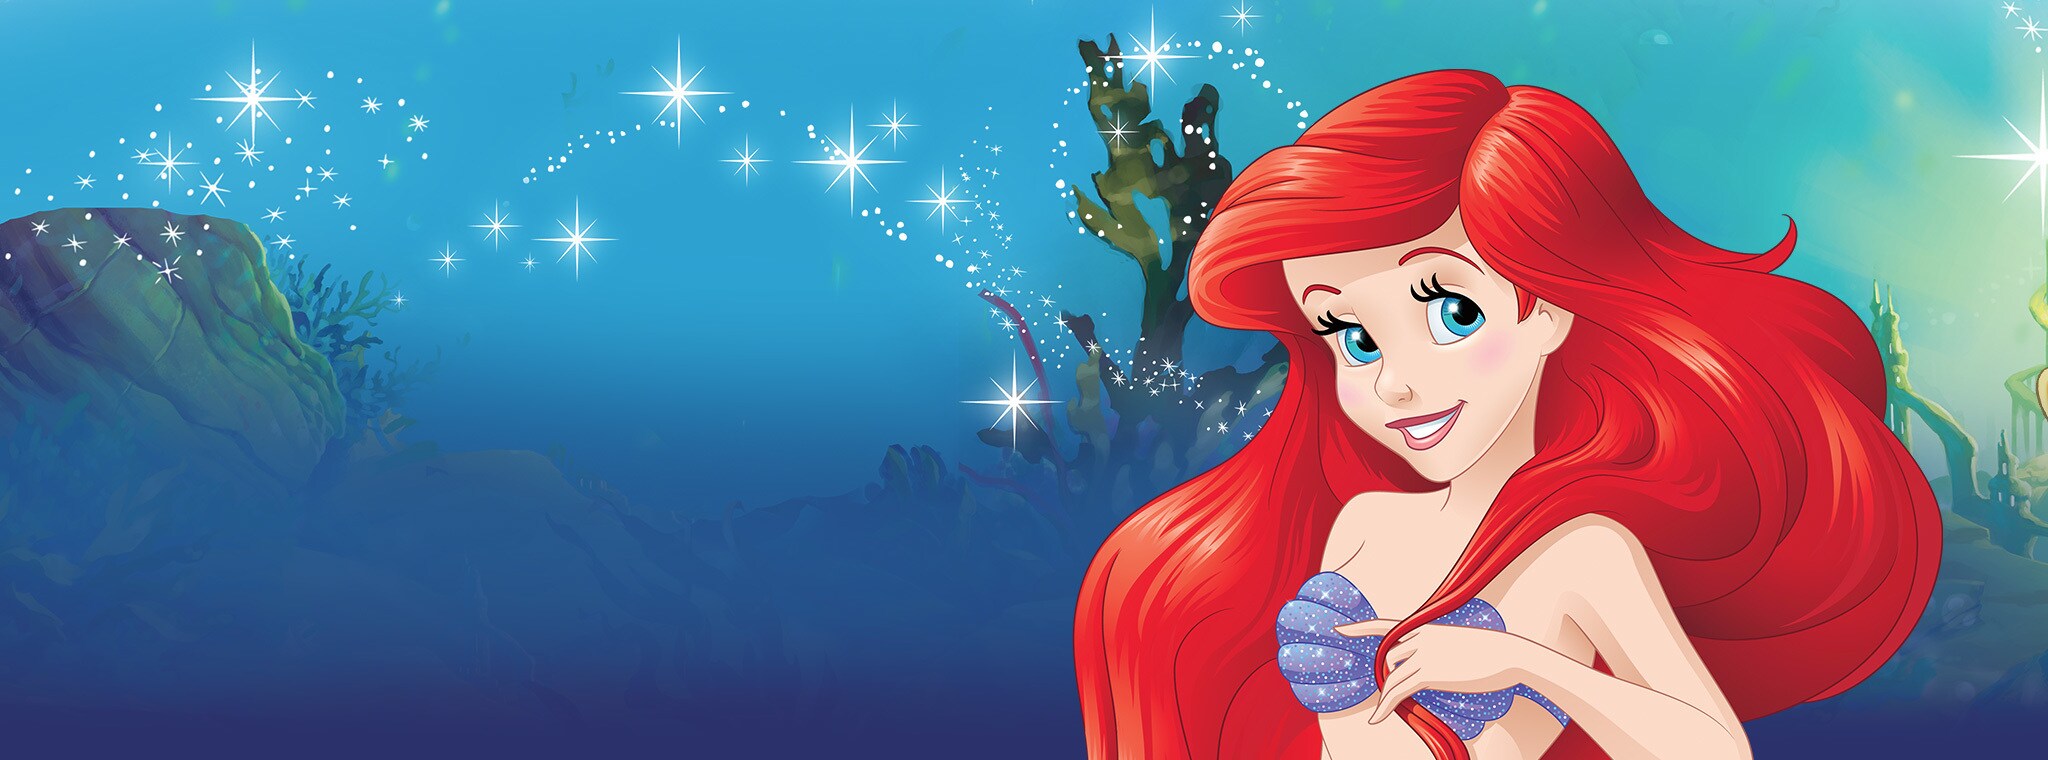 「Ariel」の画像検索結果